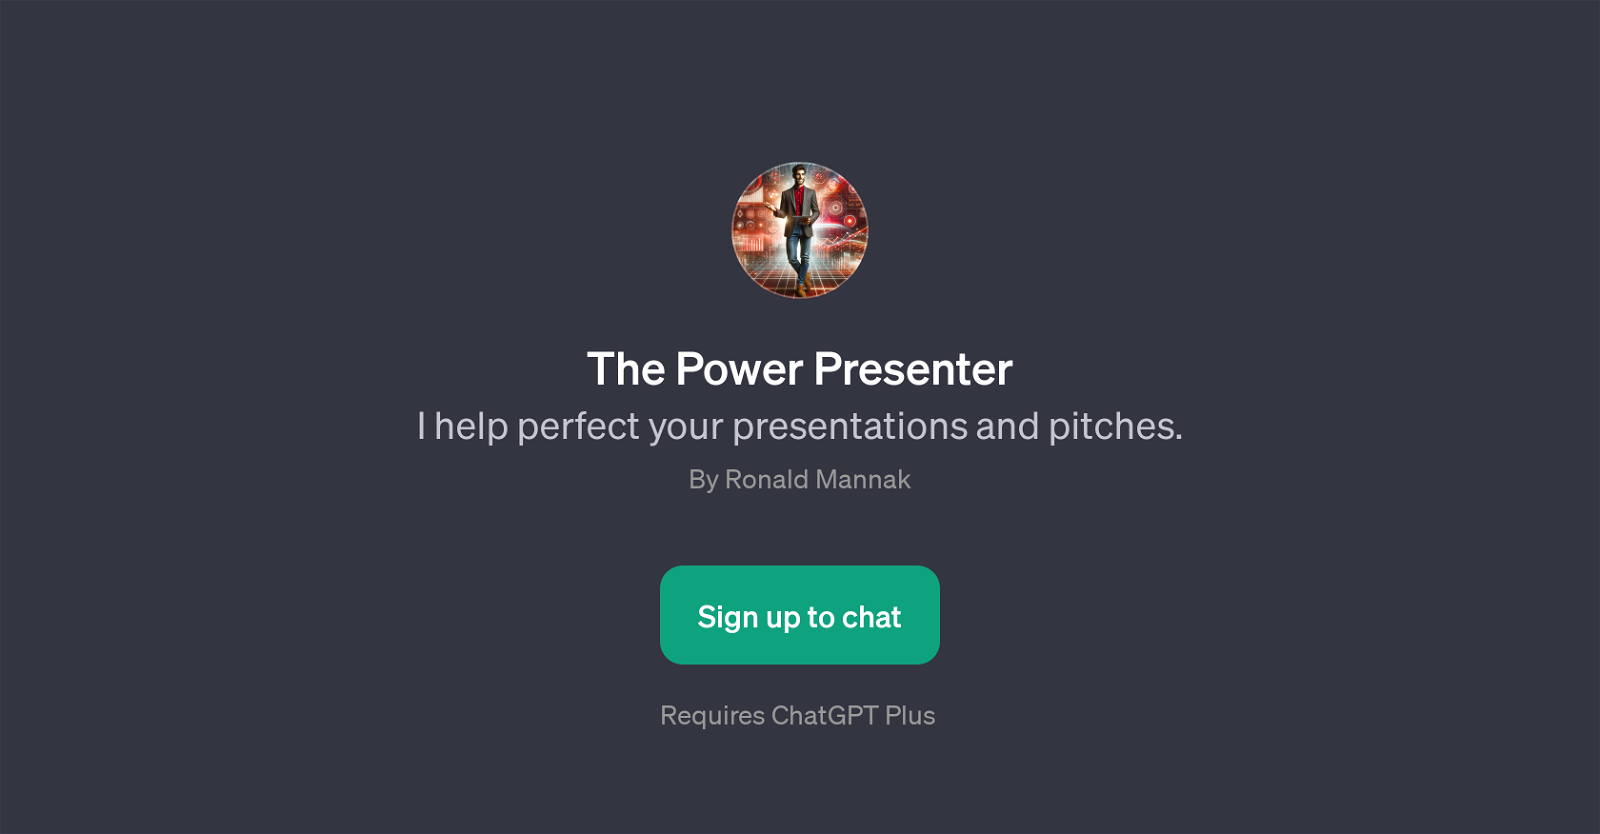 The Power Presenter website